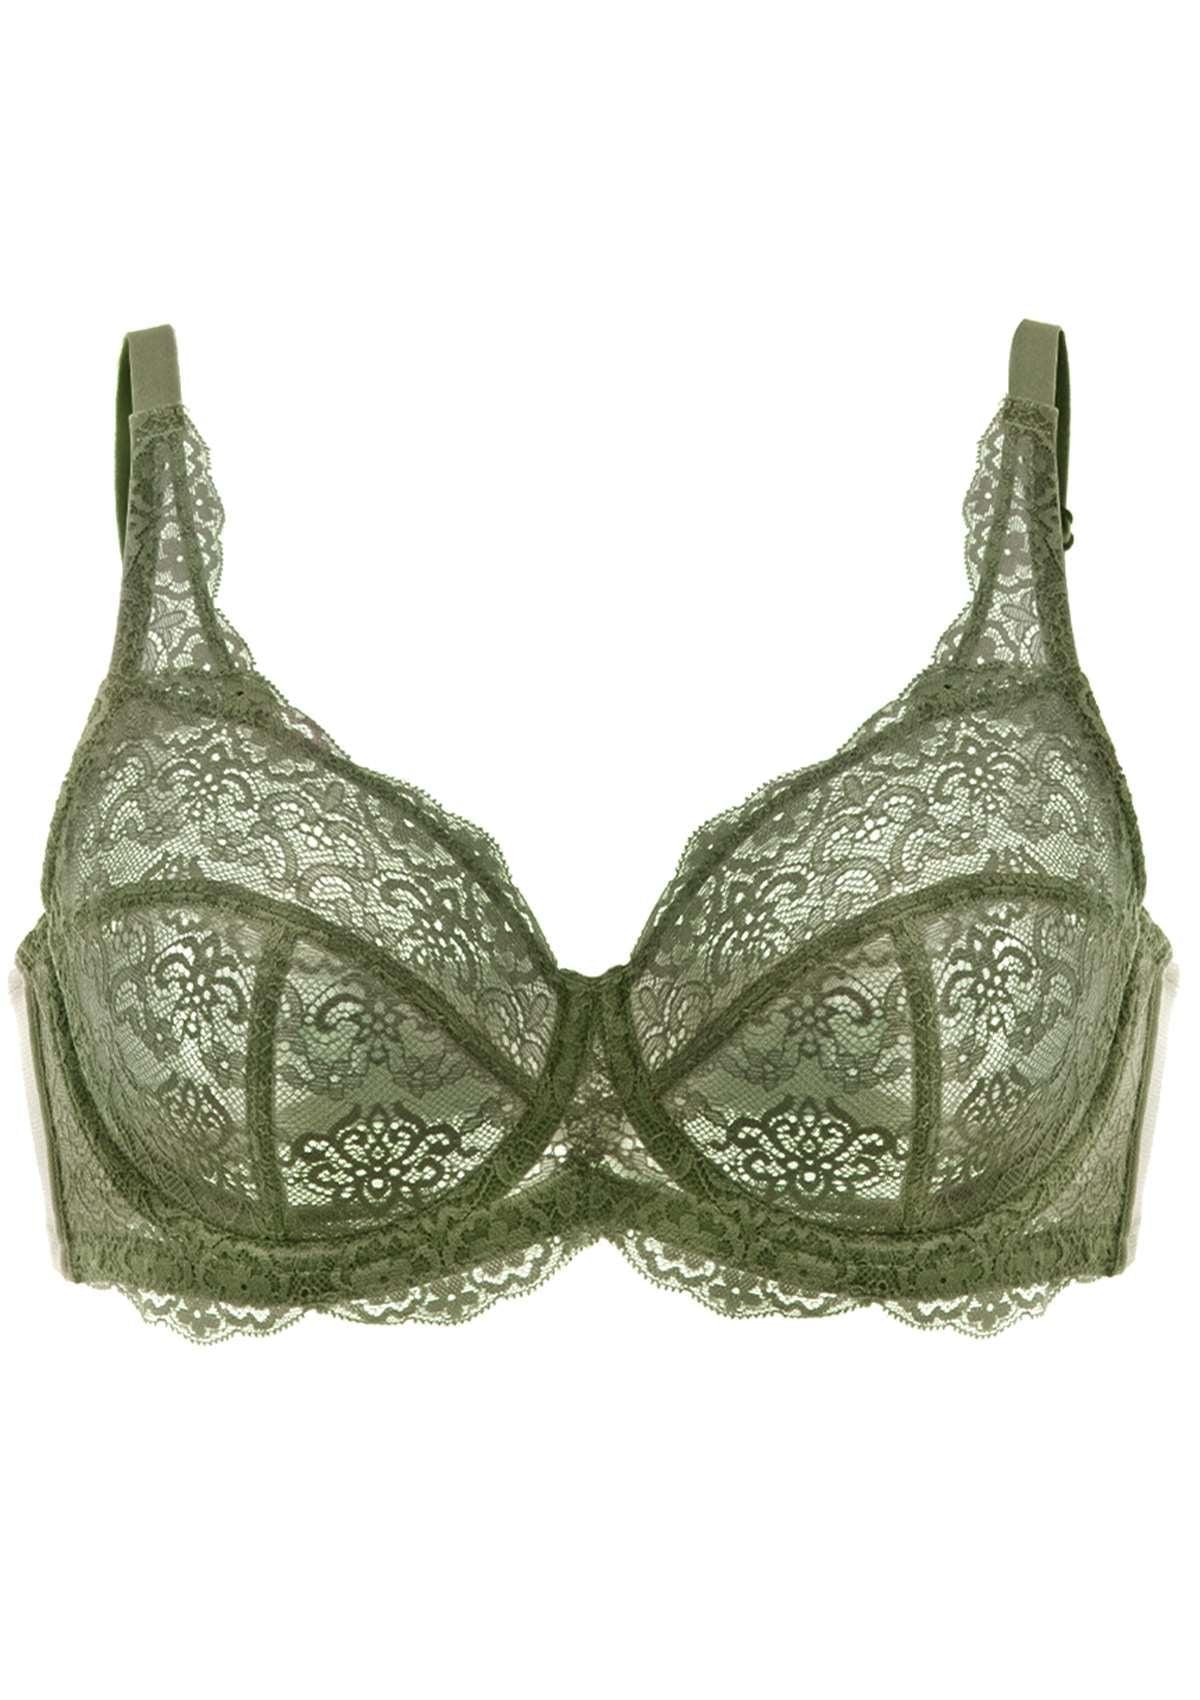 HSIA All-Over Floral Lace Unlined Bra: Minimizer Bra For Heavy Breasts - Dark Green / 34 / DD/E